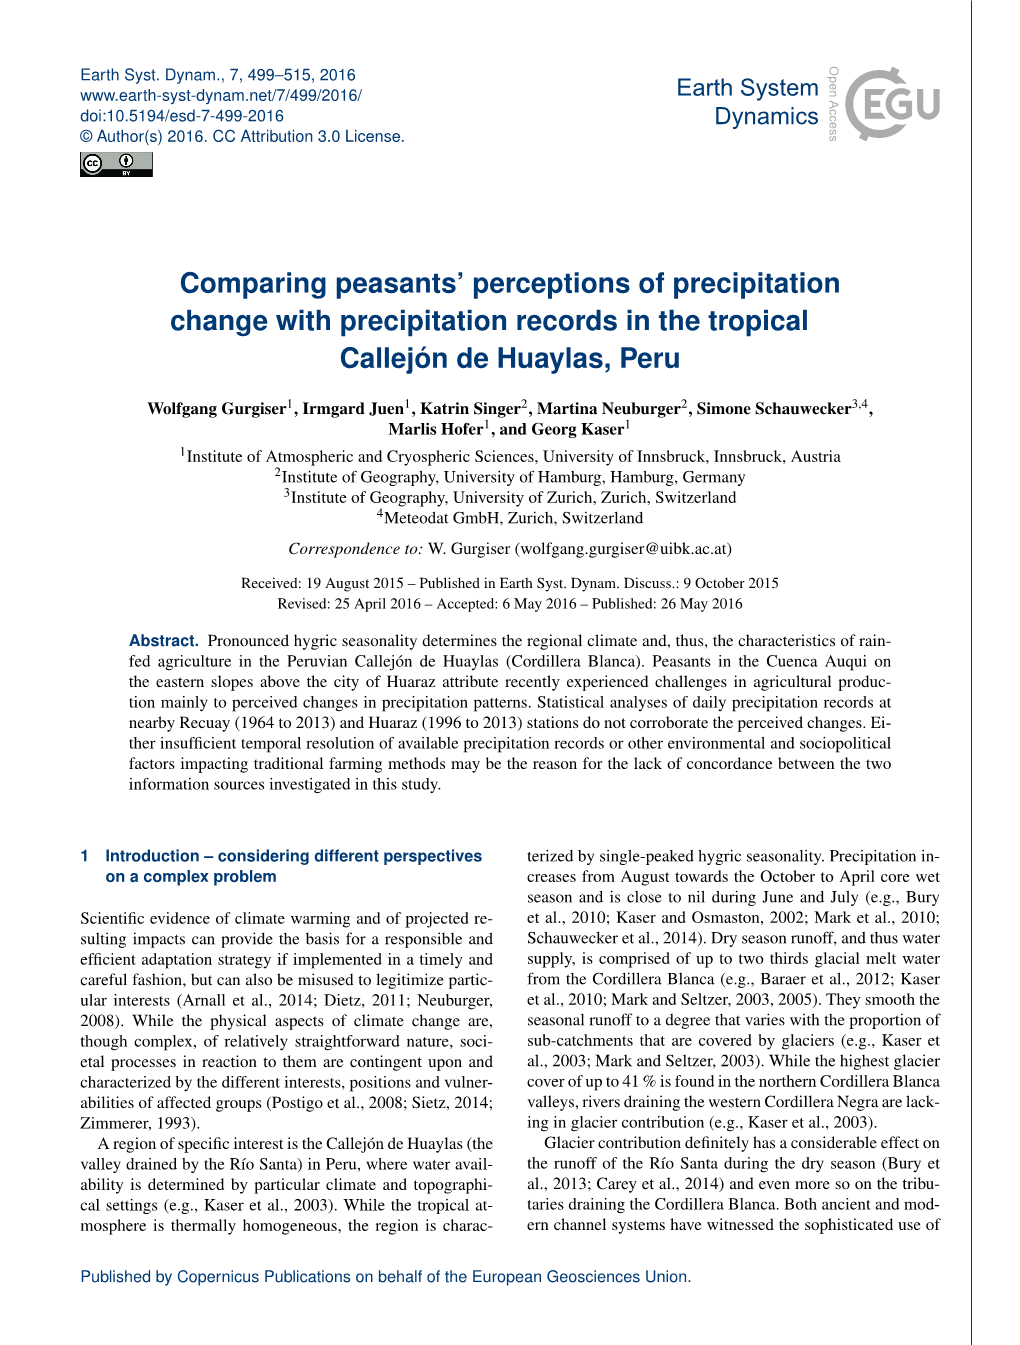 Comparing Peasants' Perceptions of Precipitation Change